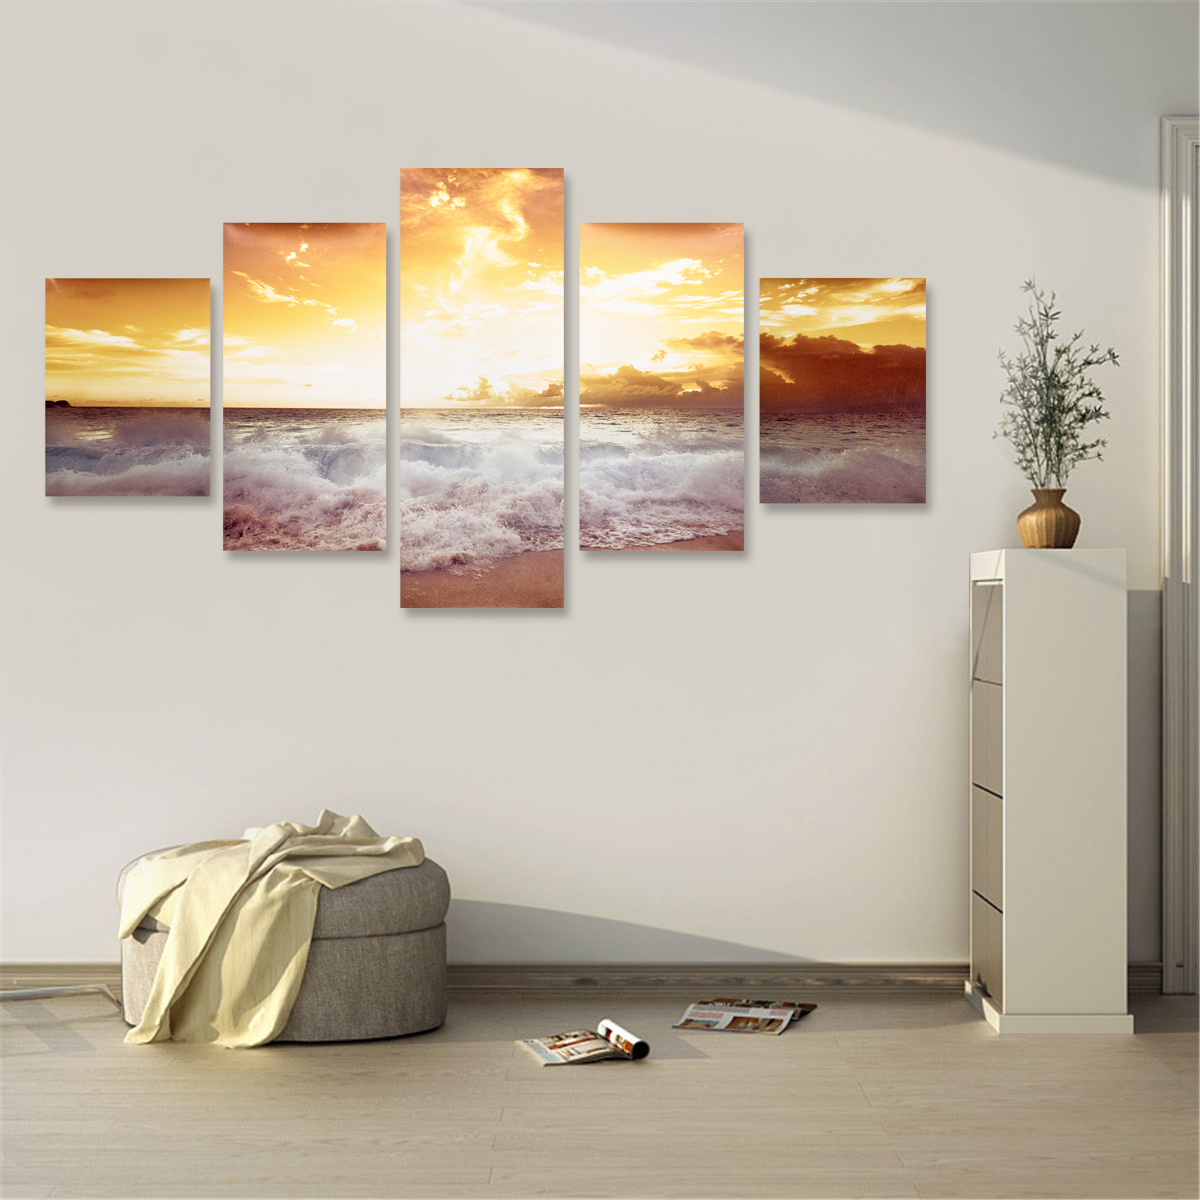 5Pcs-Frameless-Modern-Oil-Paintings-Landscape-Art-Canvas-Picture-Home-Wall-Decor-1640632-1